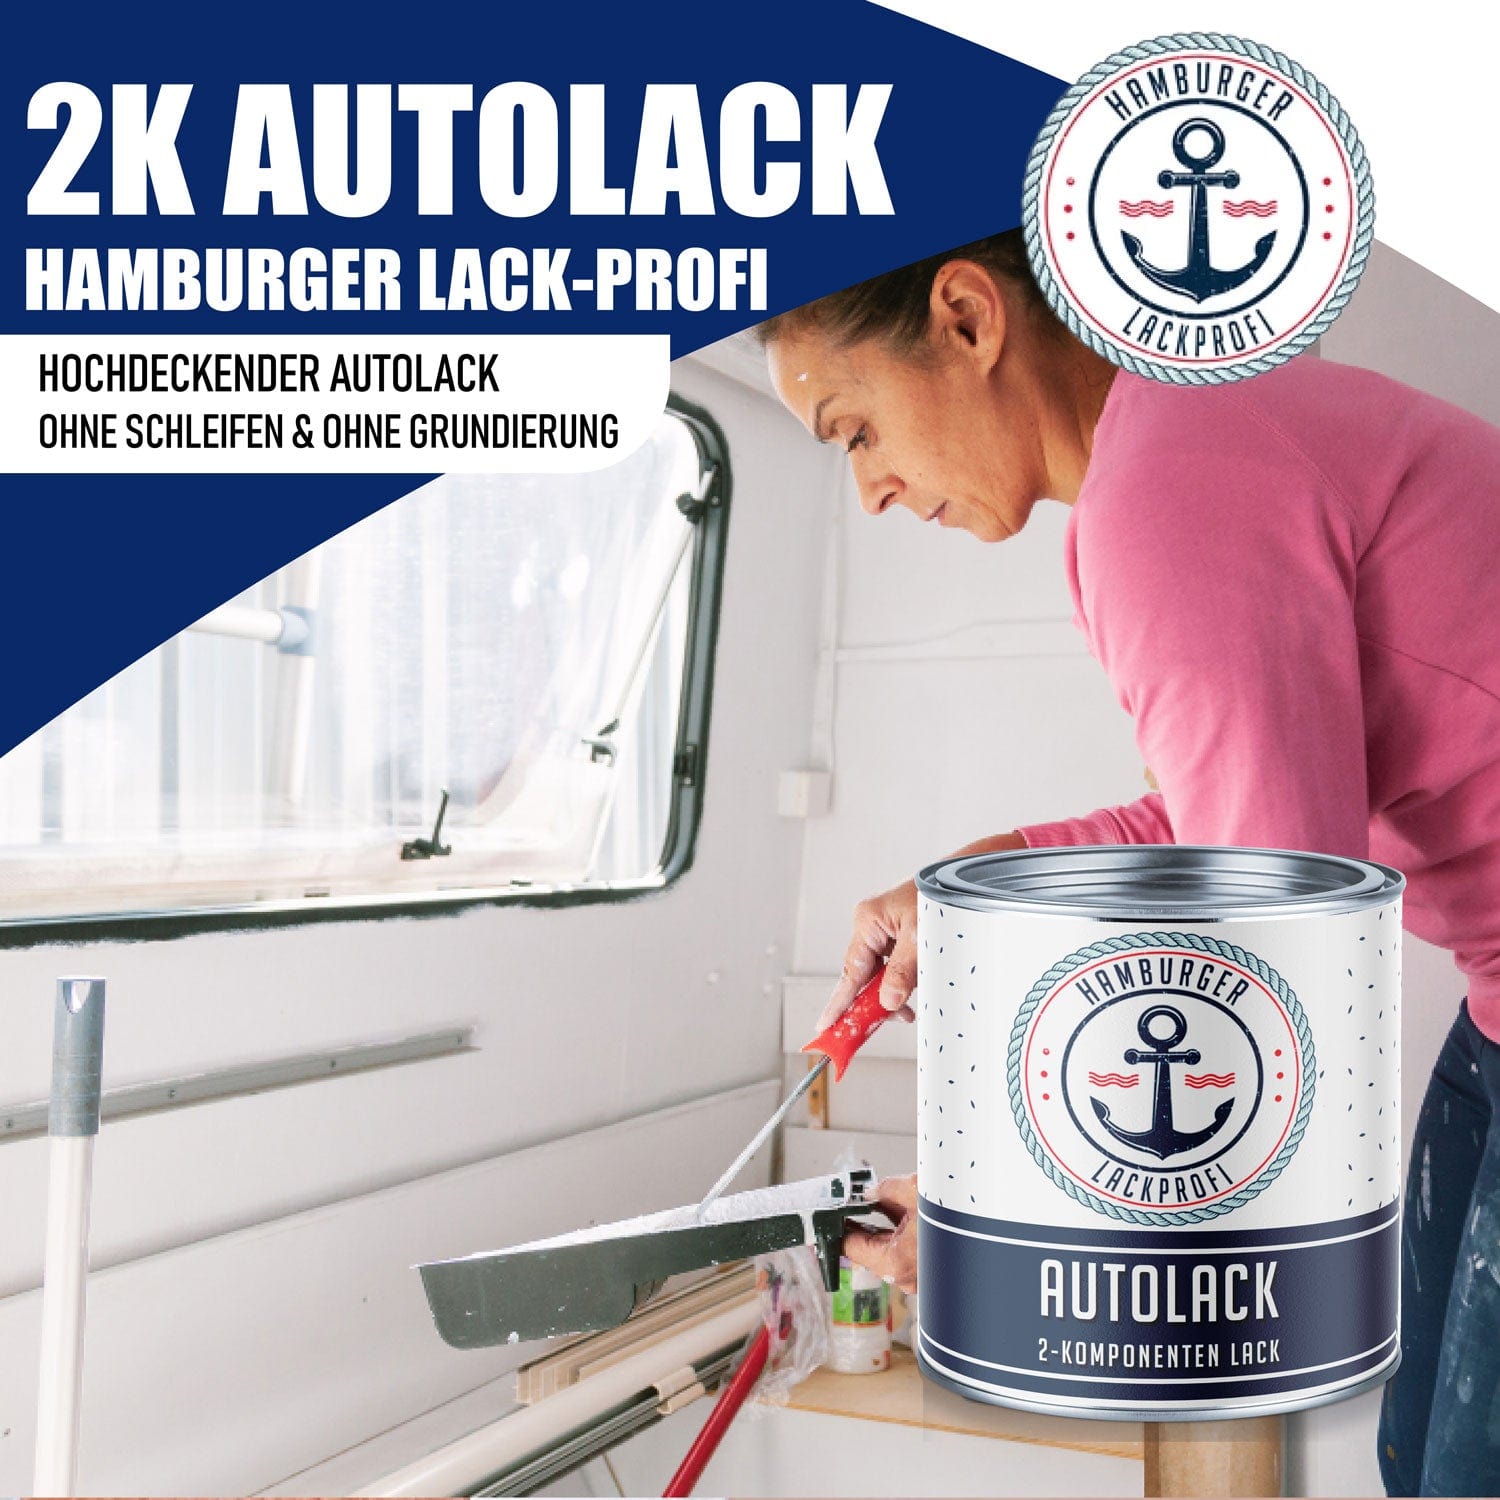 Hamburger Lack-Profi Lacke & Beschichtungen Hamburger Lack-Profi 2K Autolack in Reingrün RAL 6037 mit Lackierset (X300) & Verdünnung (1 L) - 30% Sparangebot